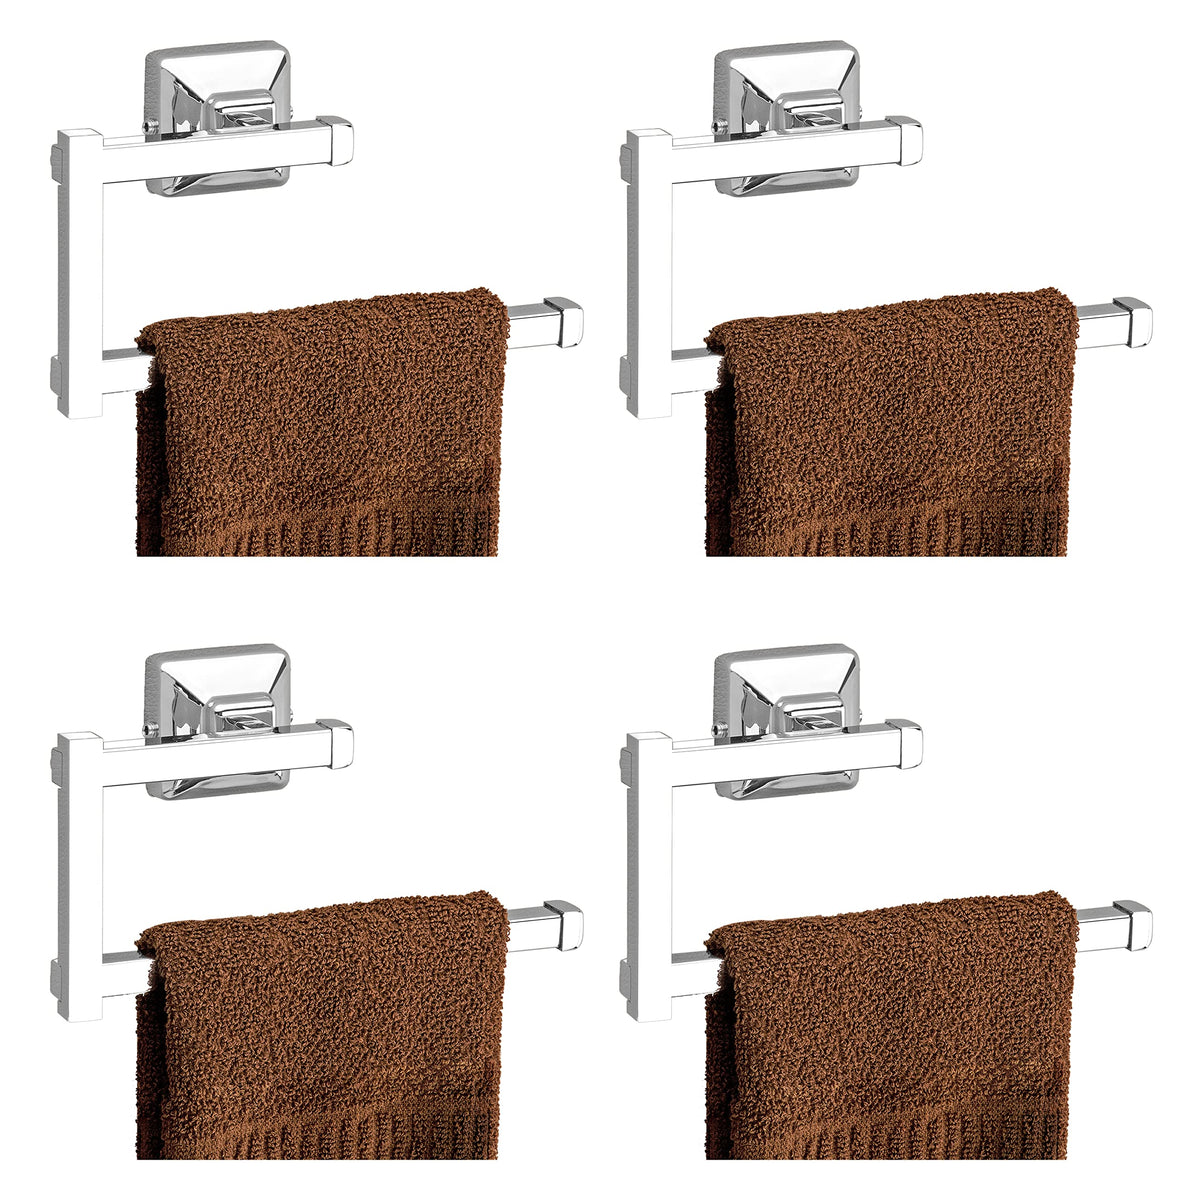 Plantex Stainless Steel 304 Grade Squaro Napkin Ring/Towel Ring /Napkin Holder/Towel Hanger/Bathroom Accessories(Chrome) - Pack of 4